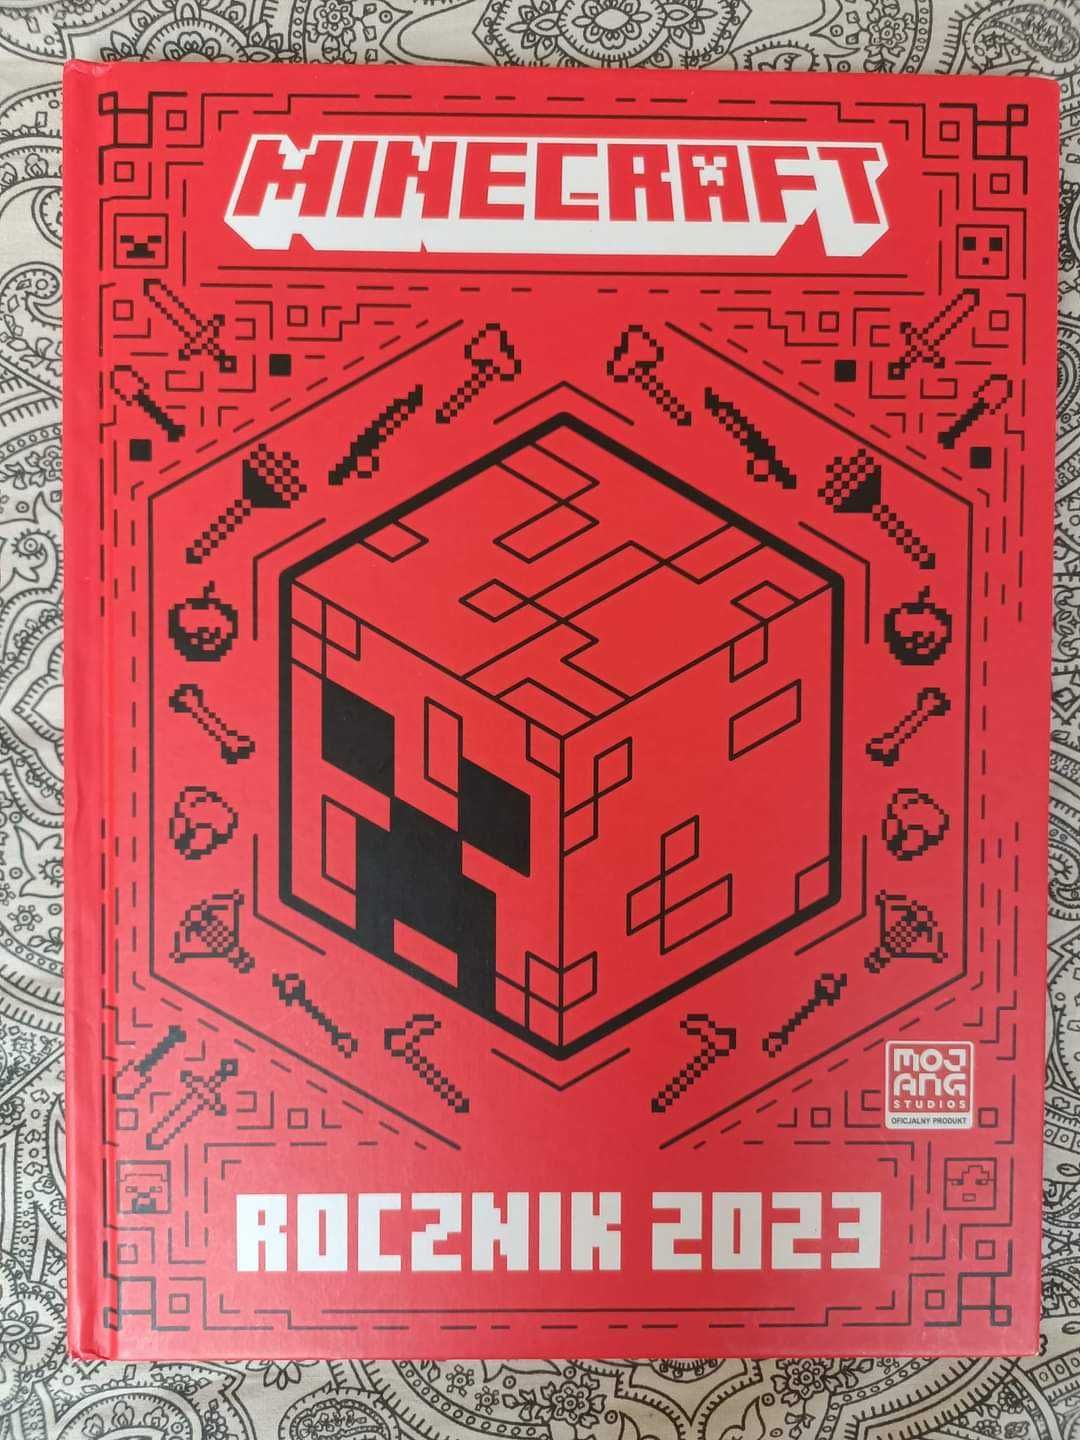 Książki Minecraft